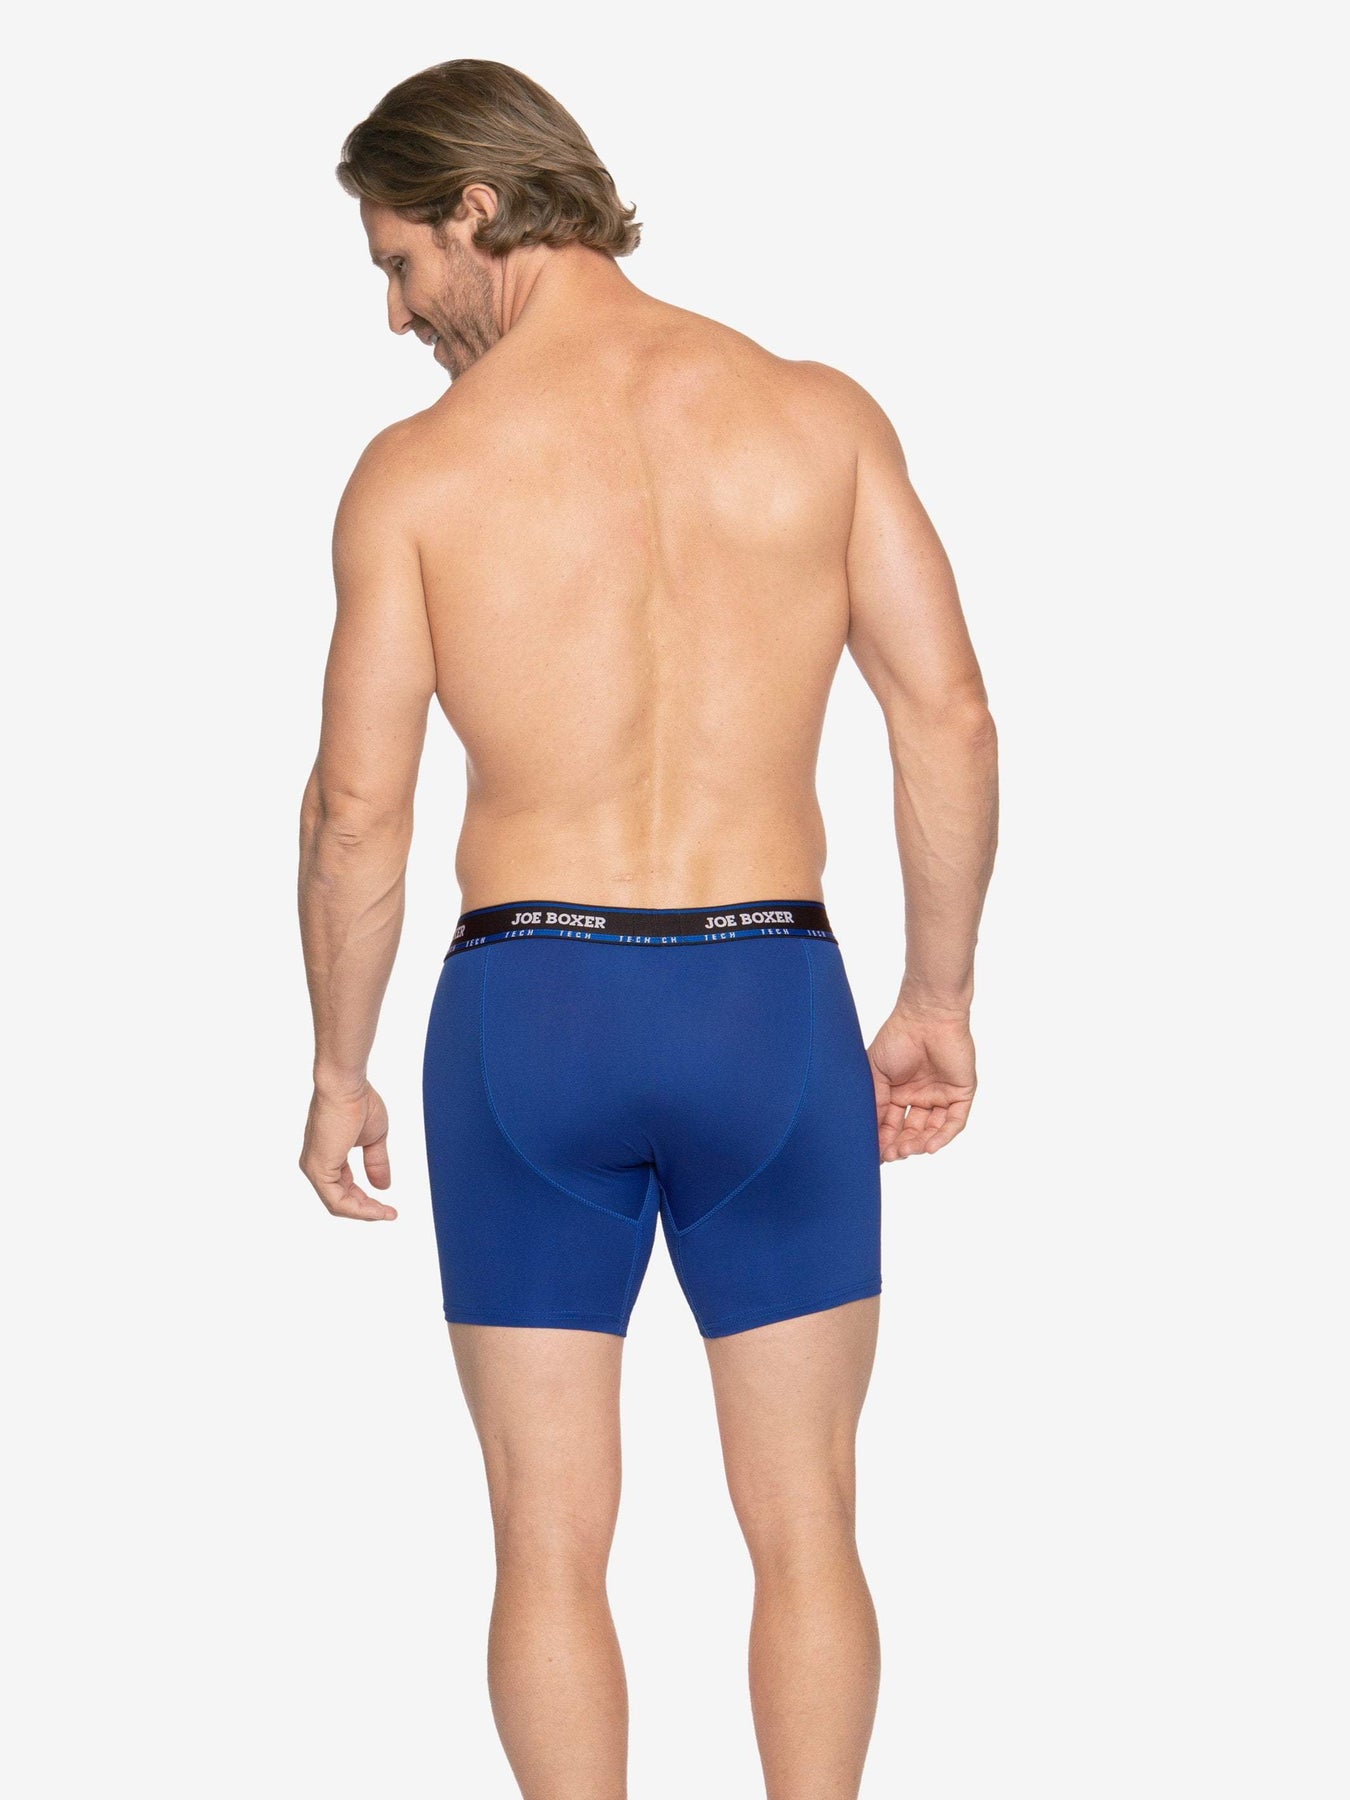 Mens Shorts Mens Athletic Underwear Mens Boxer Briefs Underwear for Men I